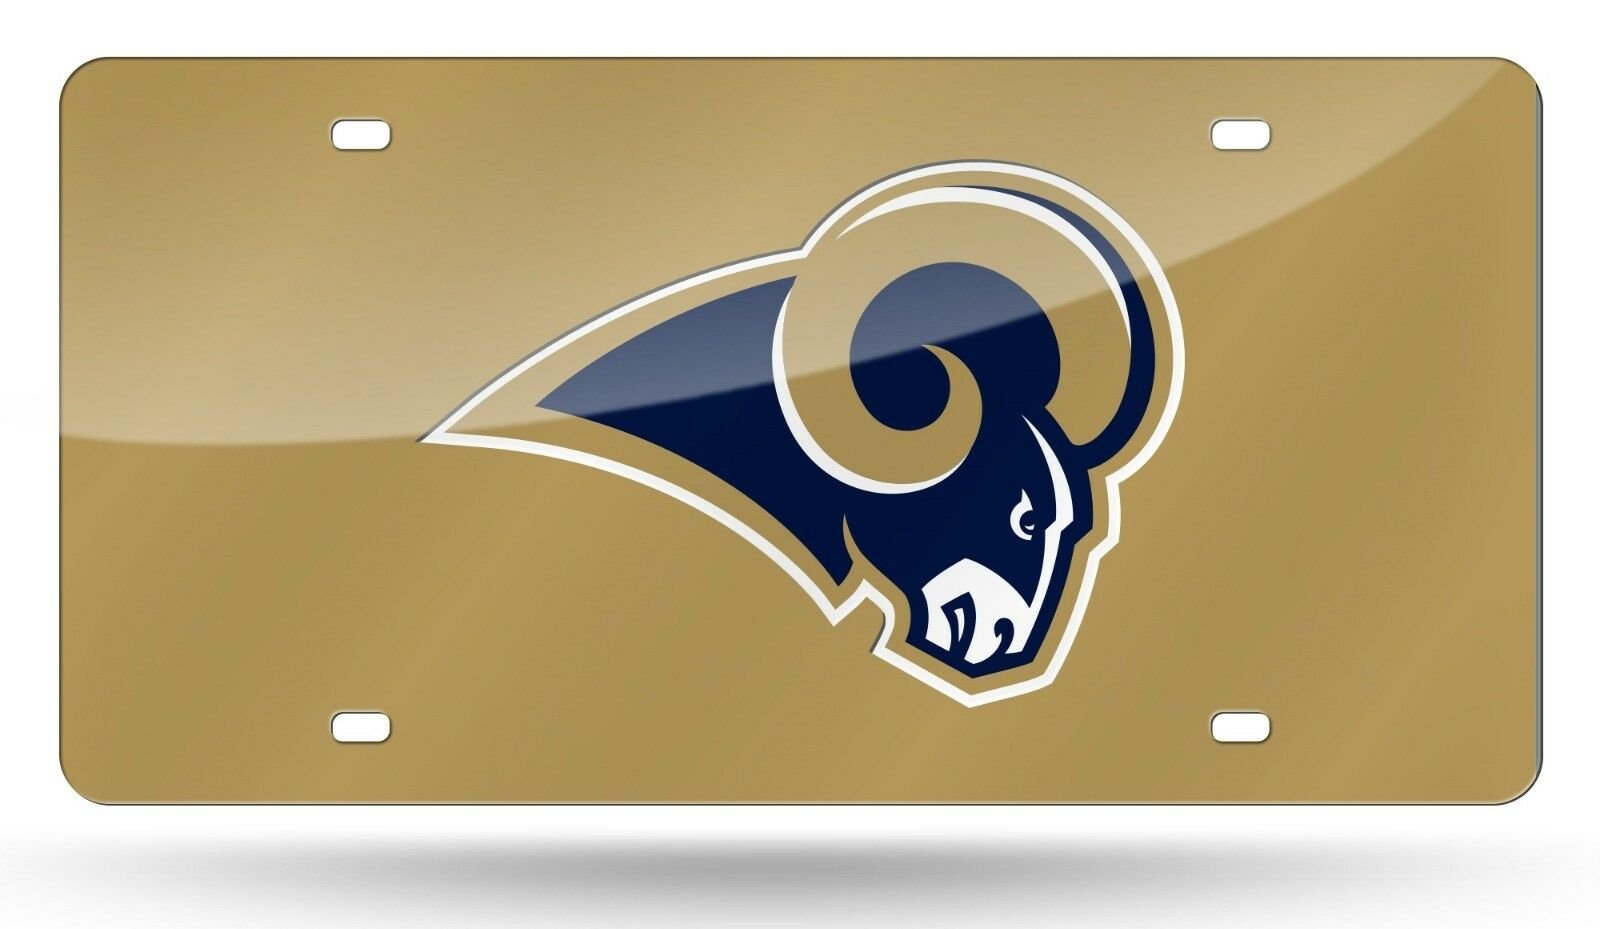 Los Angeles Rams Premium Laser Cut Tag License Plate, Gold Retro Logo, Mirrored Inlaid Acrylic, 12x6 Inch